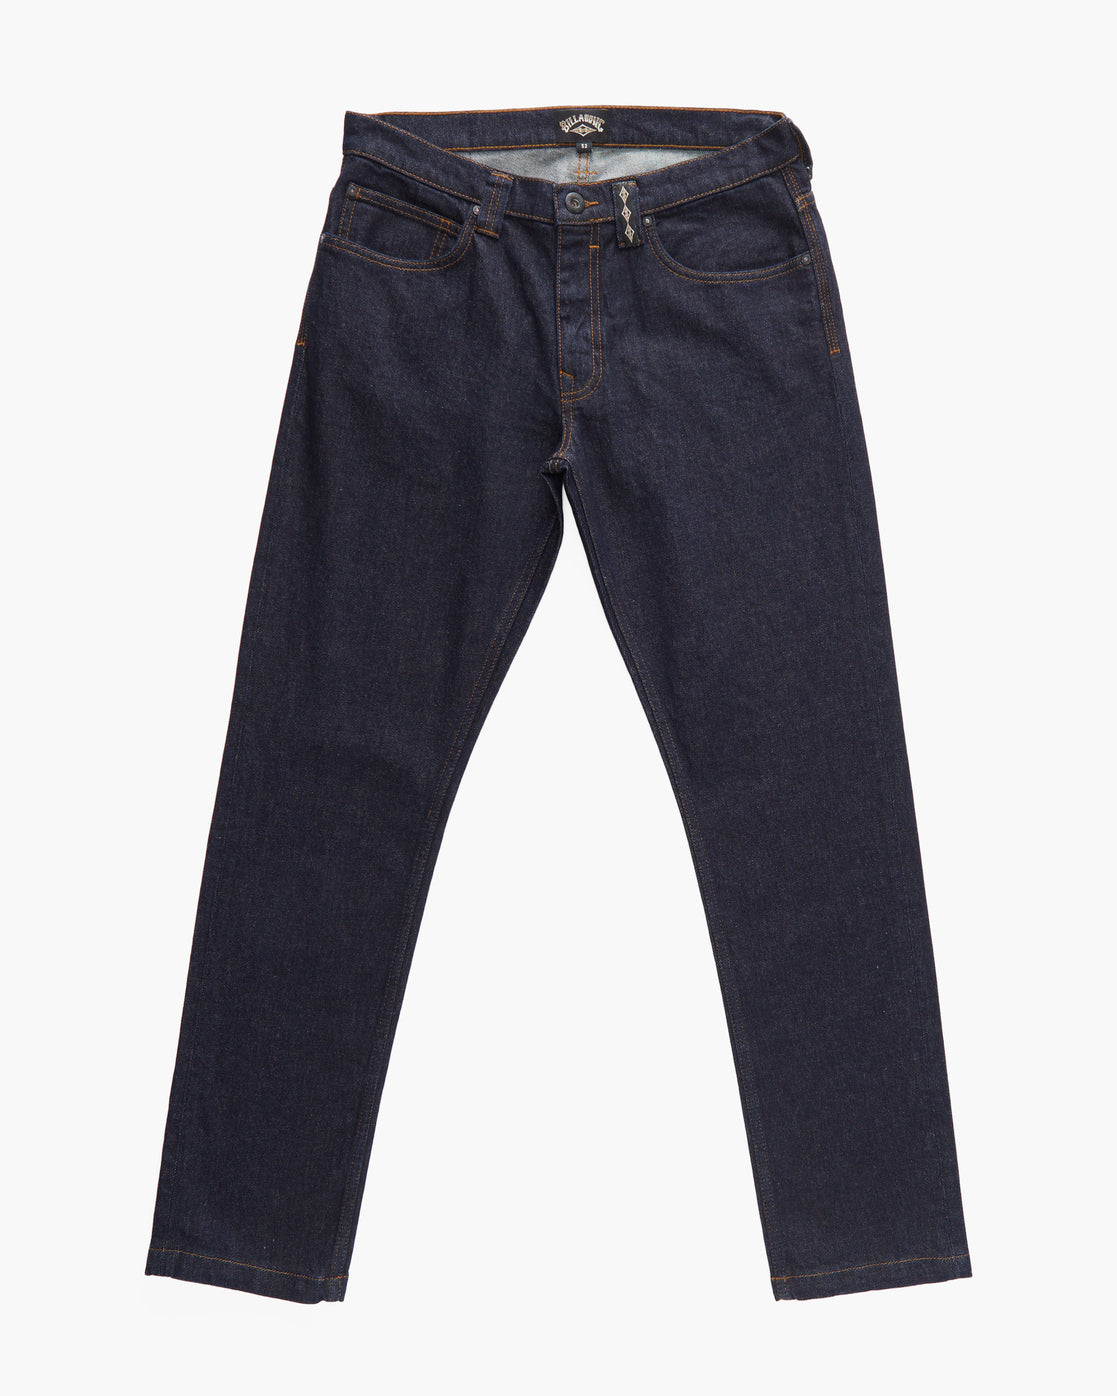 Buy Navy Blue Boys Jeans – Mumkins